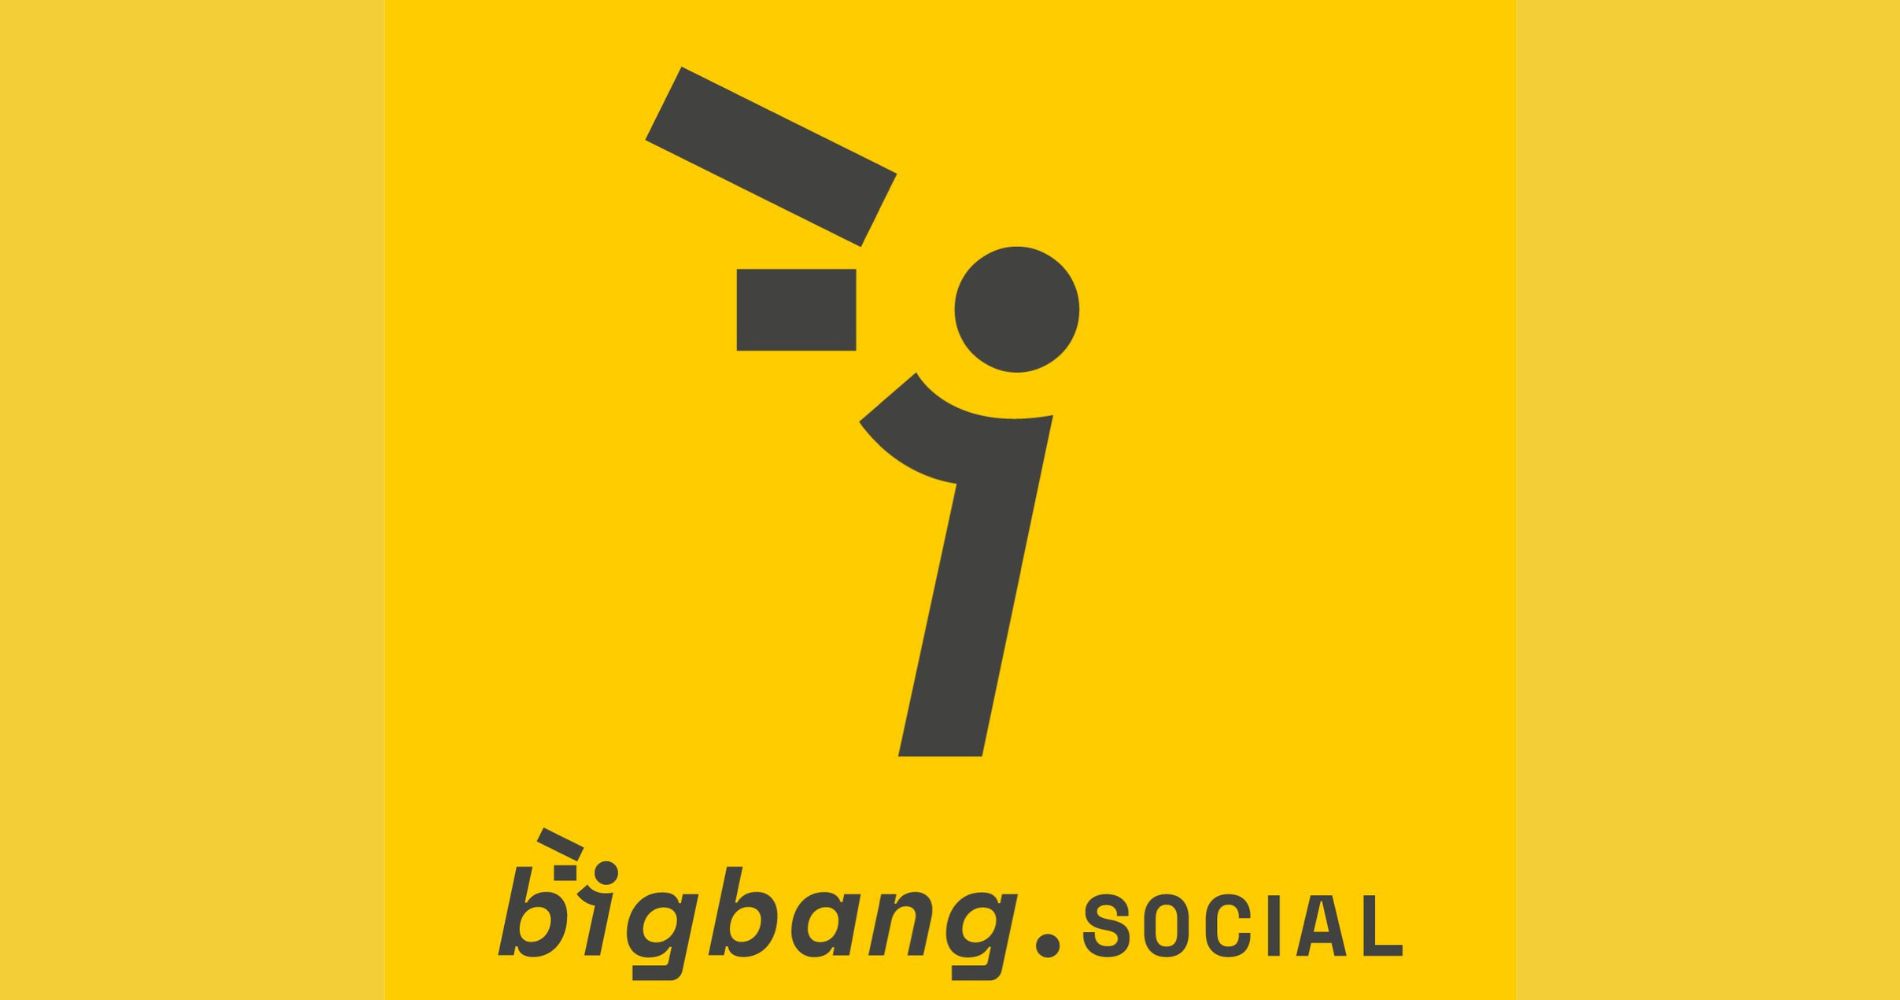 Collective Artists’ Network elevates it's platform Big Bang Social